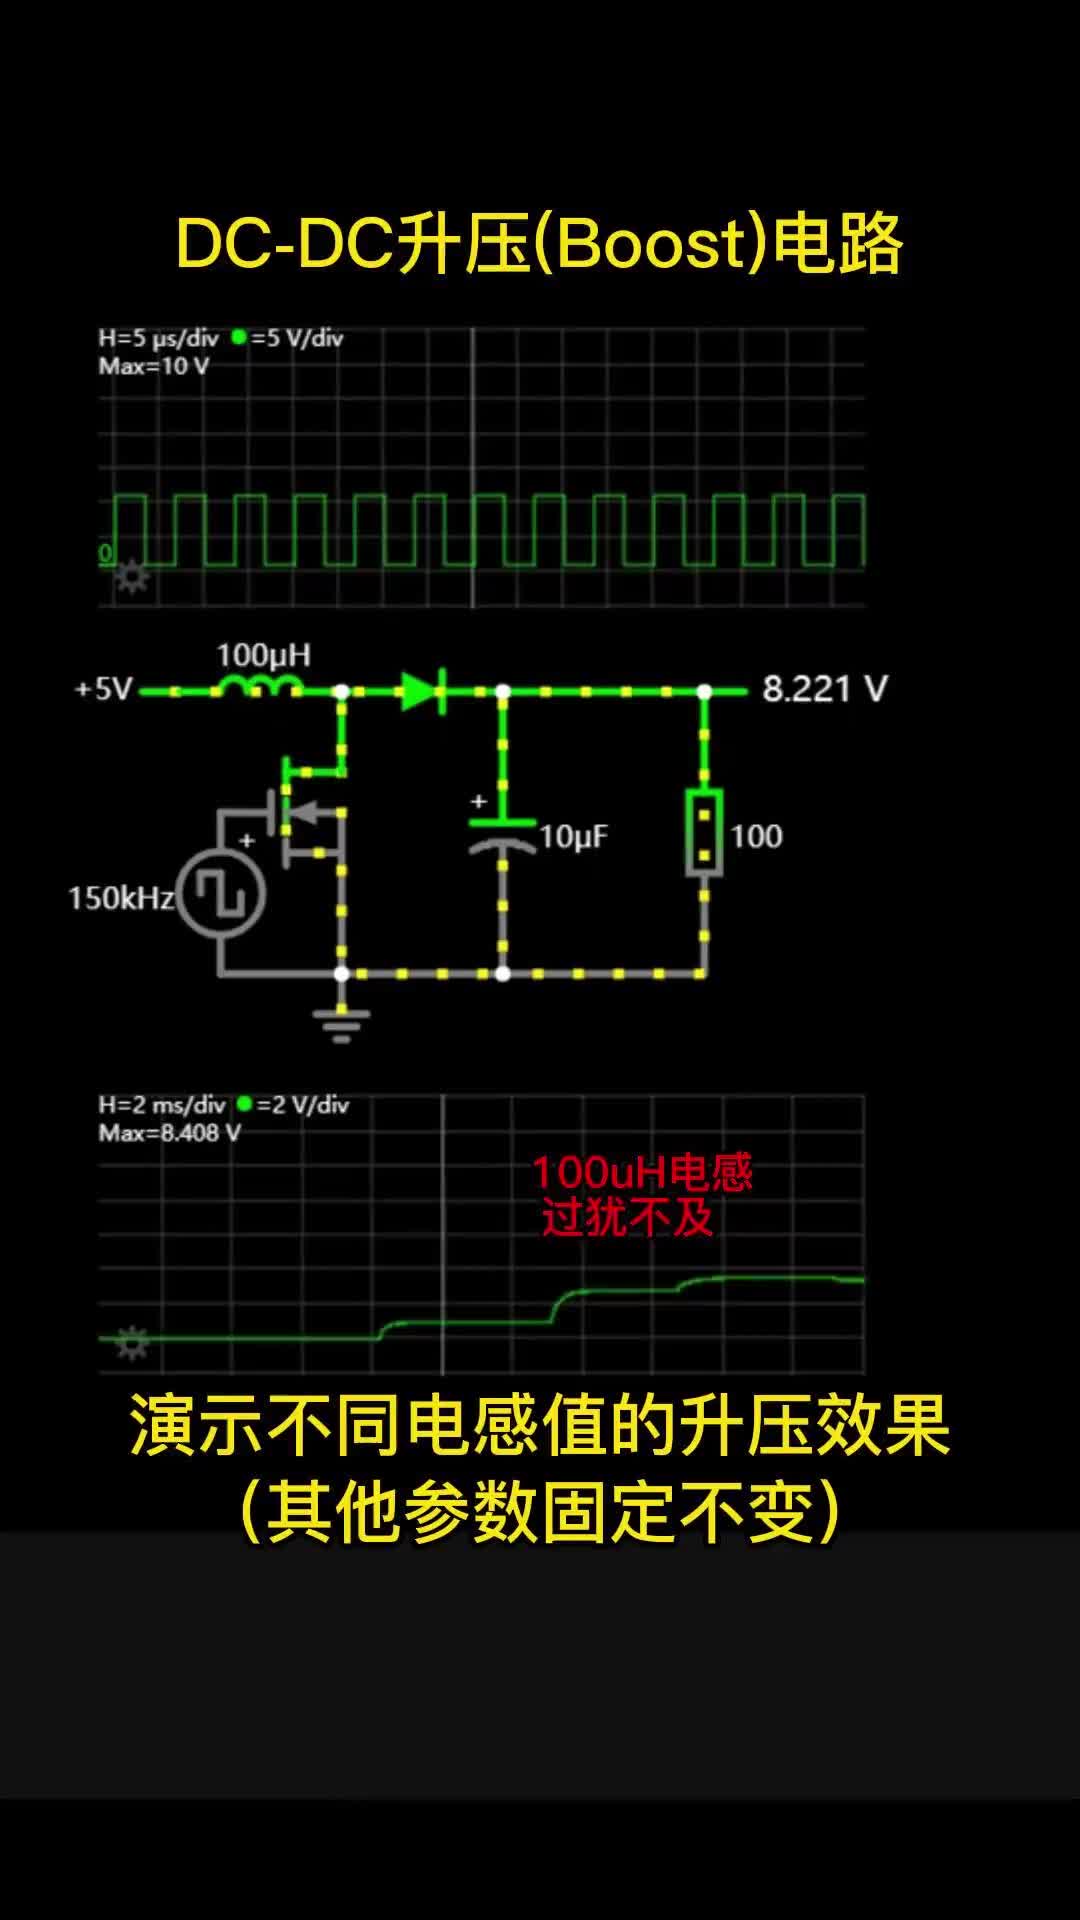 00007 DC-DC升压(Boost)电路，演示不同电感值的升压效果（其他参数固定不变）